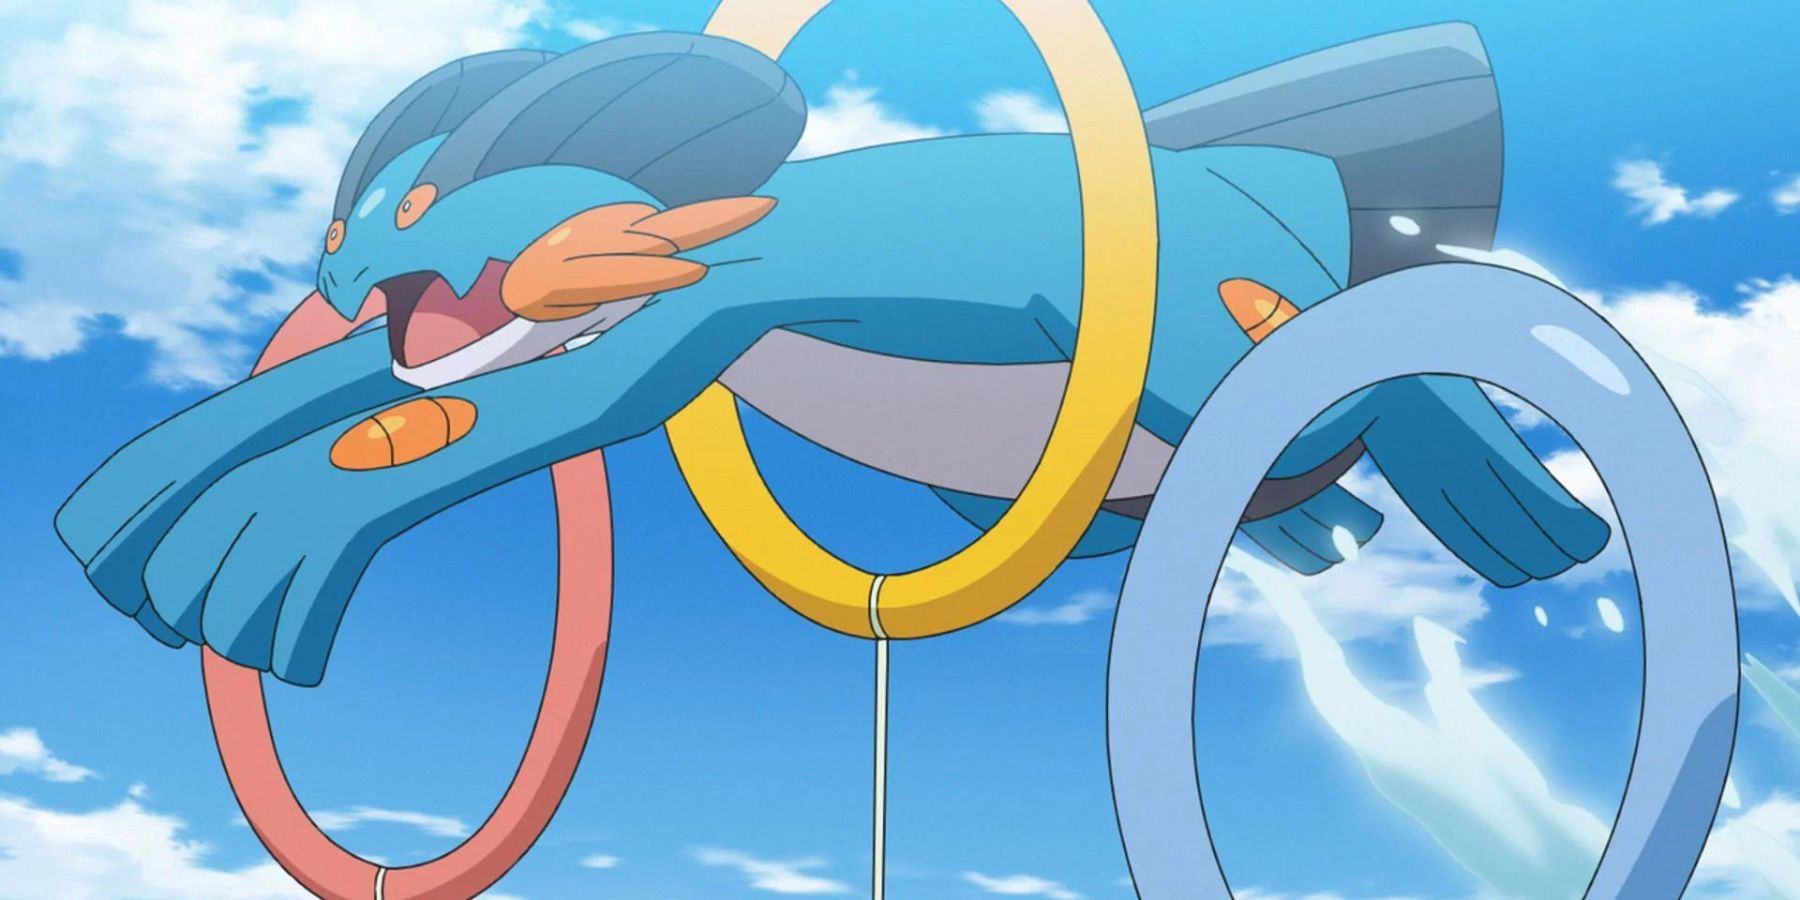 Swampert jumping through hoops in the Pokémon anime.